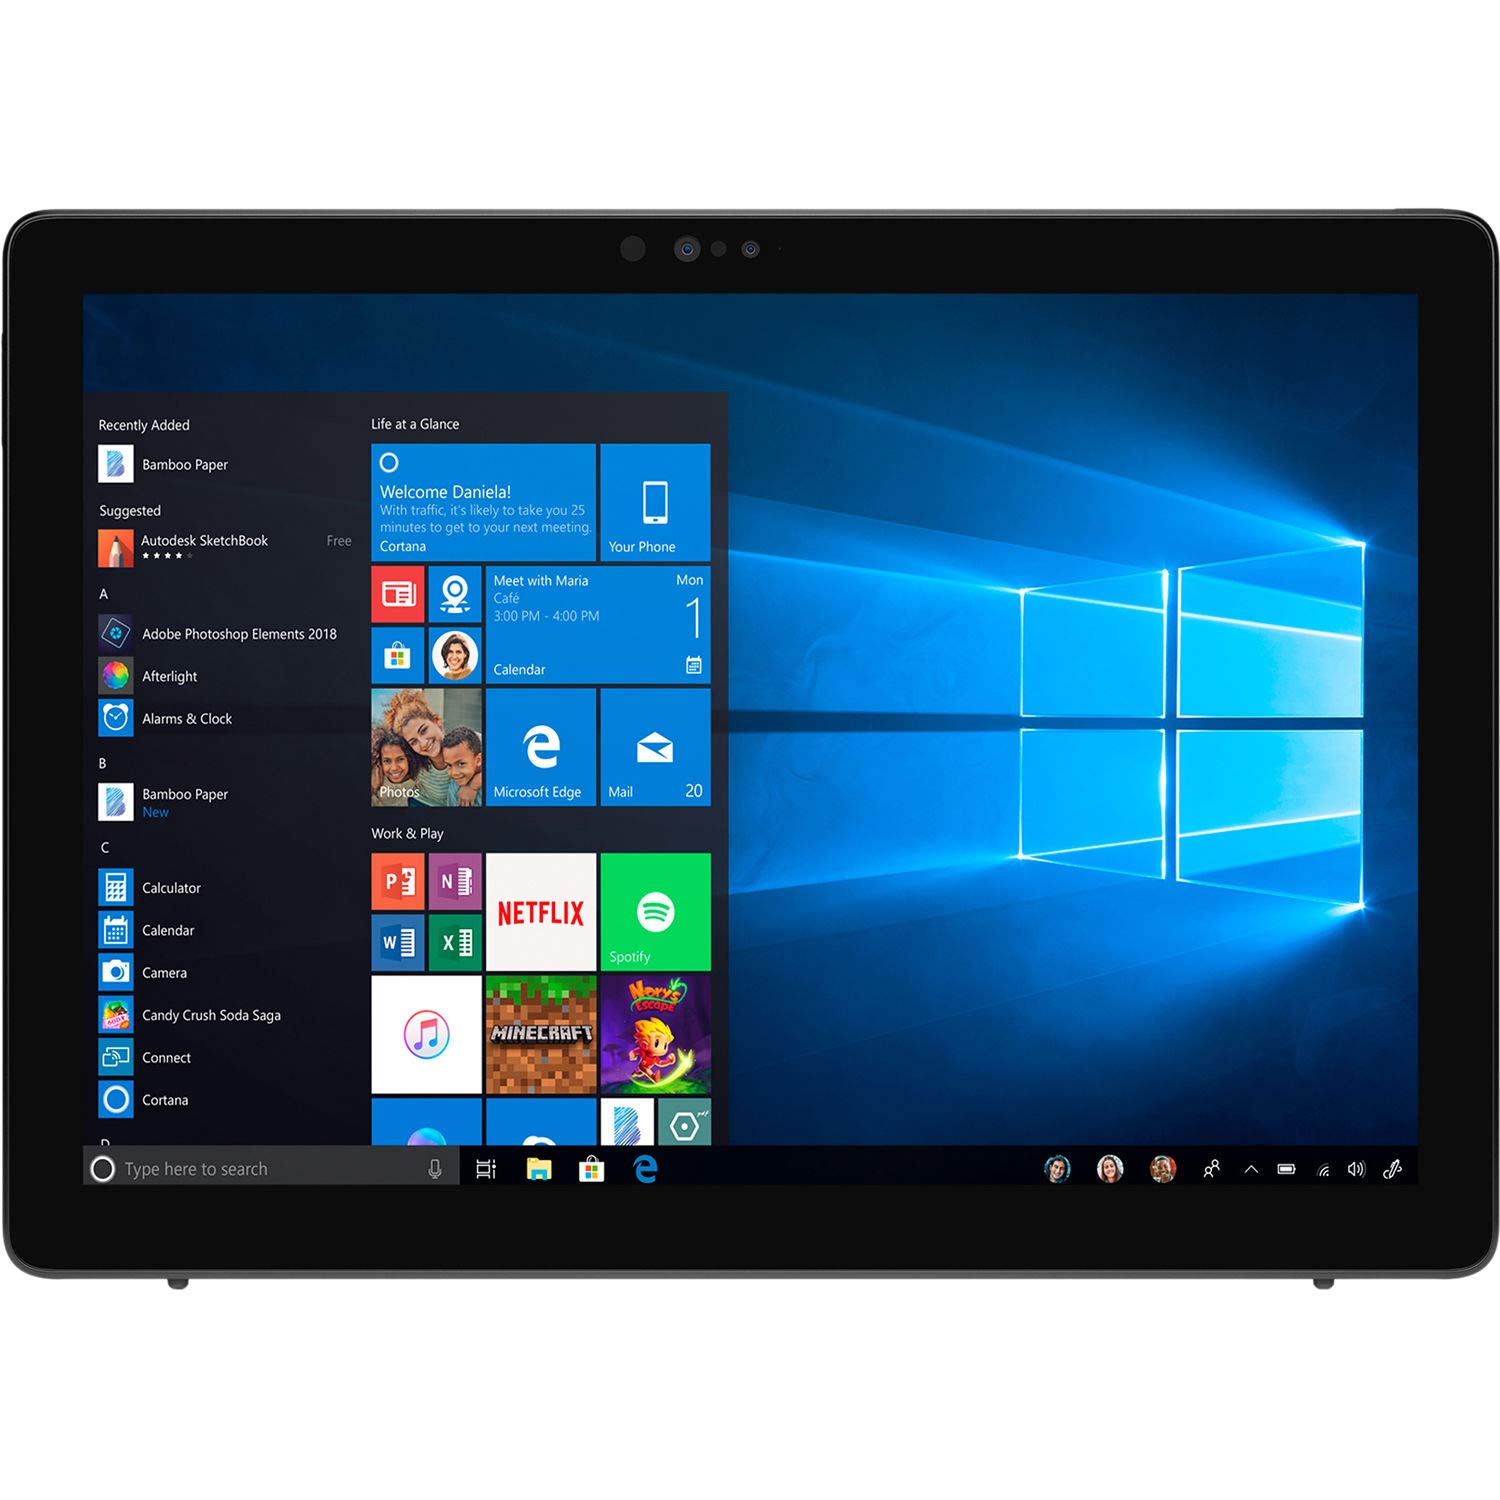 Dell Newest 10th Gen Latitude 7210 Tablet 2-in-1 PC, Intel Core i5 10310U Processor, 8GB Ram, 256GB Solid State Drive, Dual Camera, WiFi & Bluetooth, USB 3.1 Gen 1, Type C Port, Win 10 Pro (Renewed)